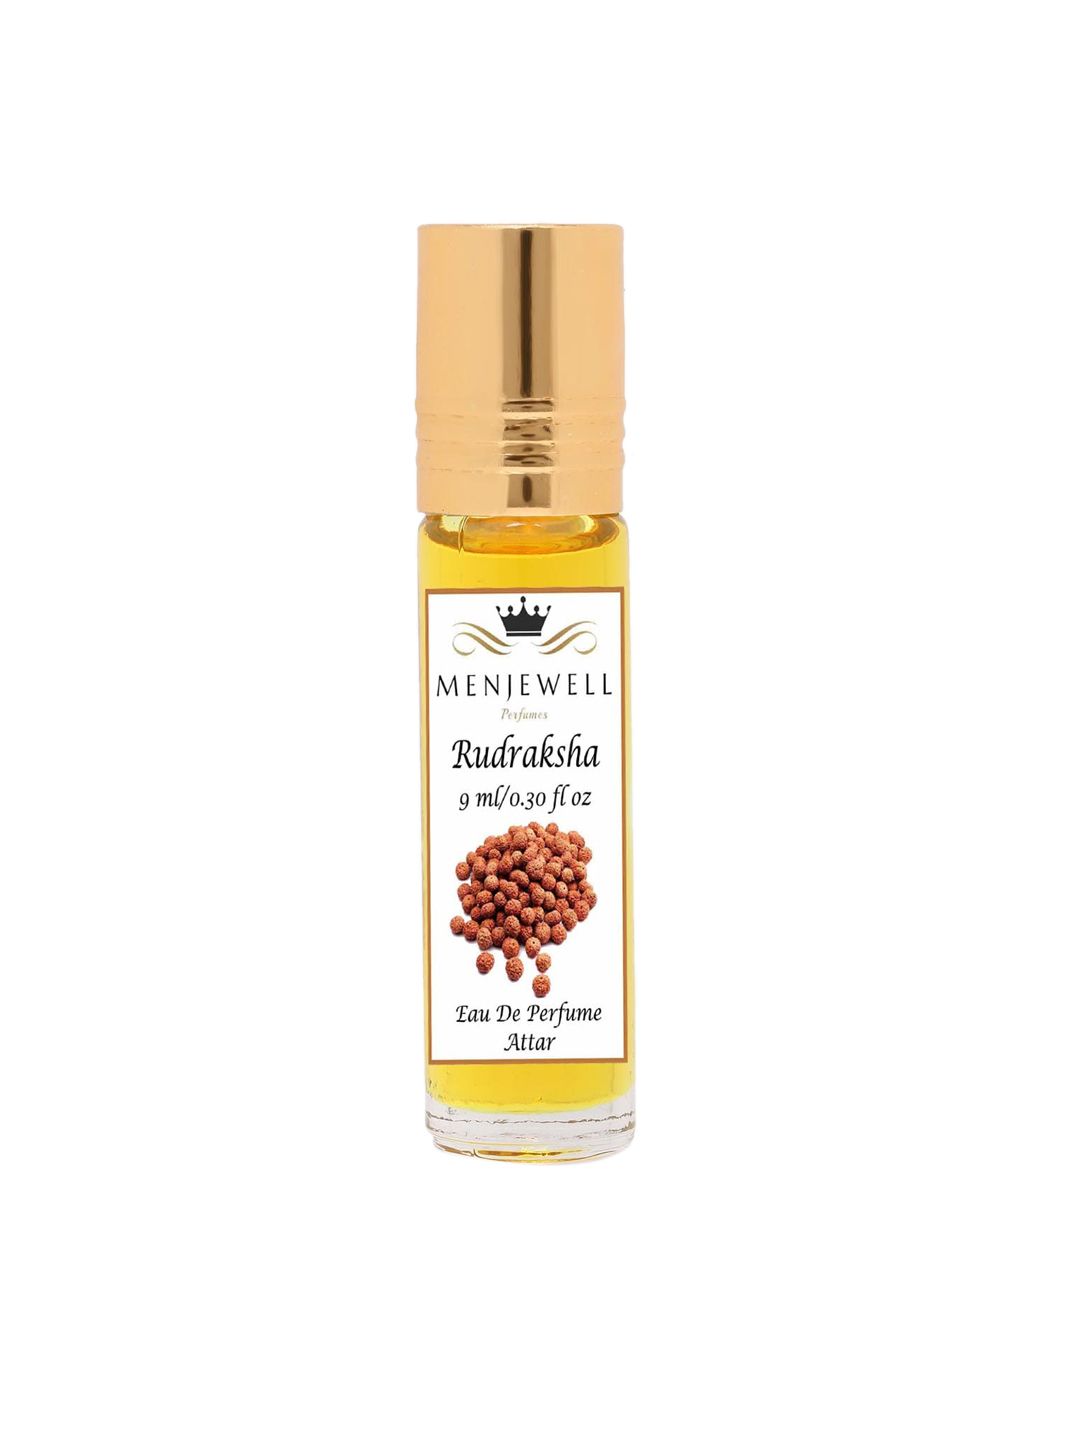 Menjewell Fragrances Rudraksha Attar Perfume 9 ml Price in India